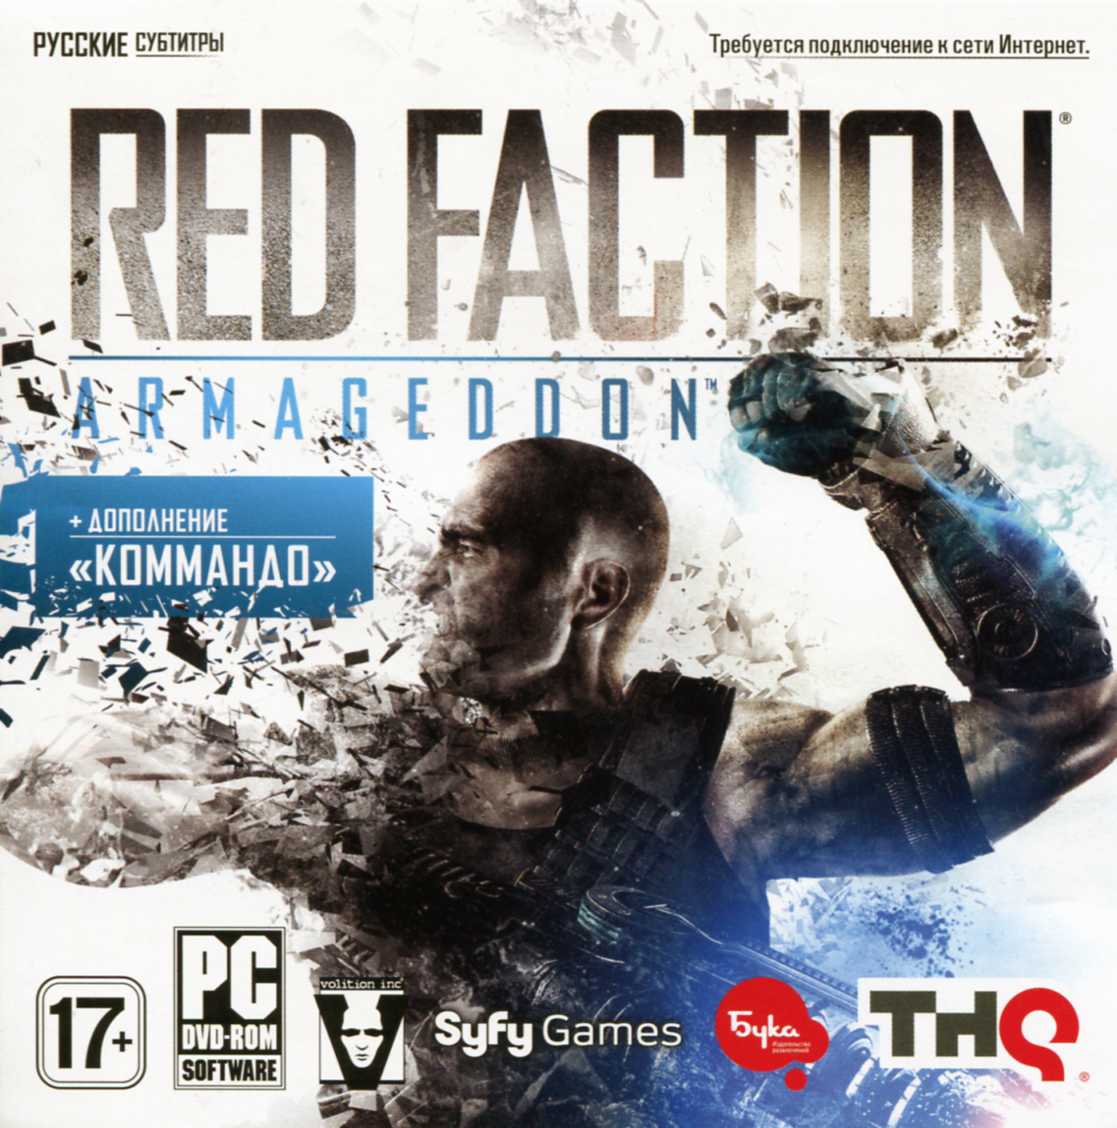 RED FACTION: ARMAGEDDON CDKEY + DLC - STEAM - BUKA